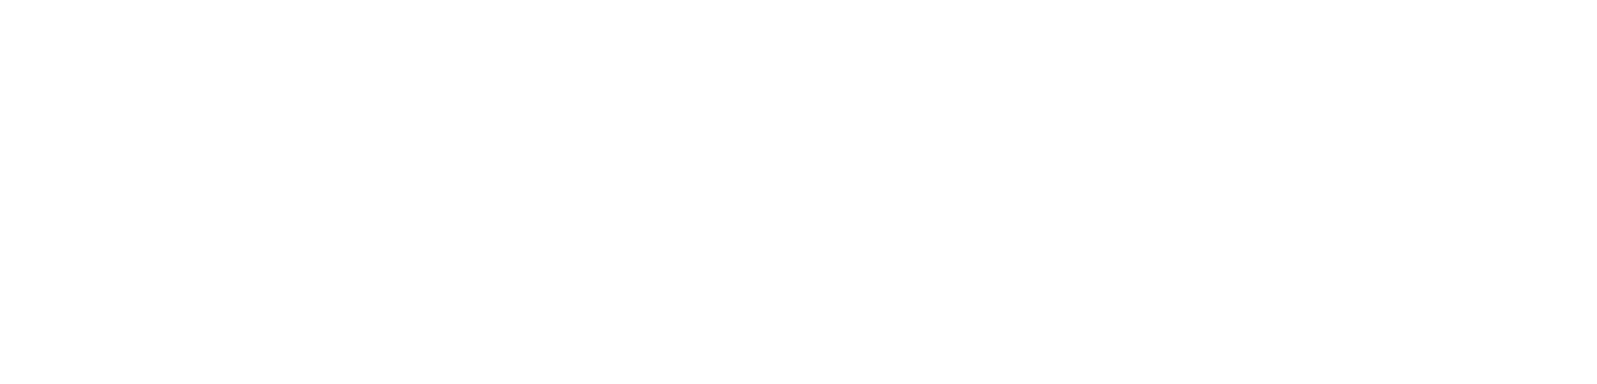 Ironwood Pharmaceuticals
 logo large for dark backgrounds (transparent PNG)